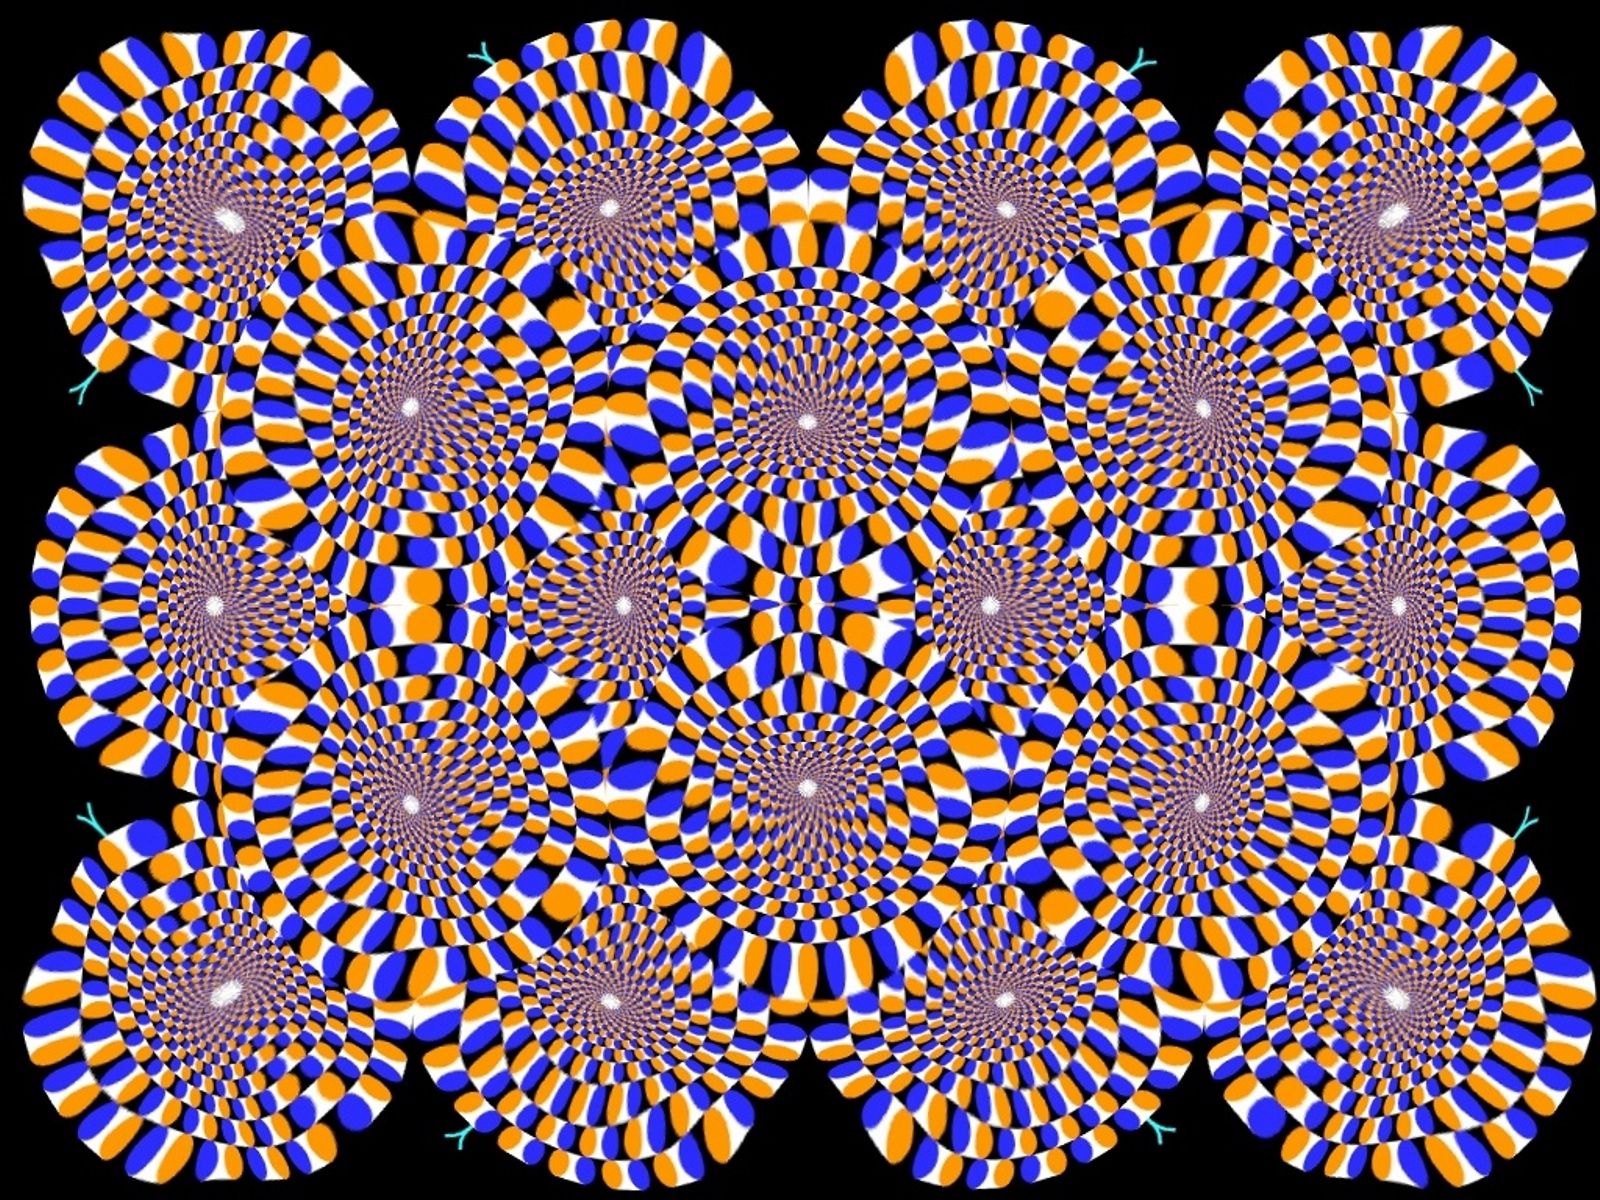 Immersion abstract, circles, optical illusion, rotation Free Stock Photos